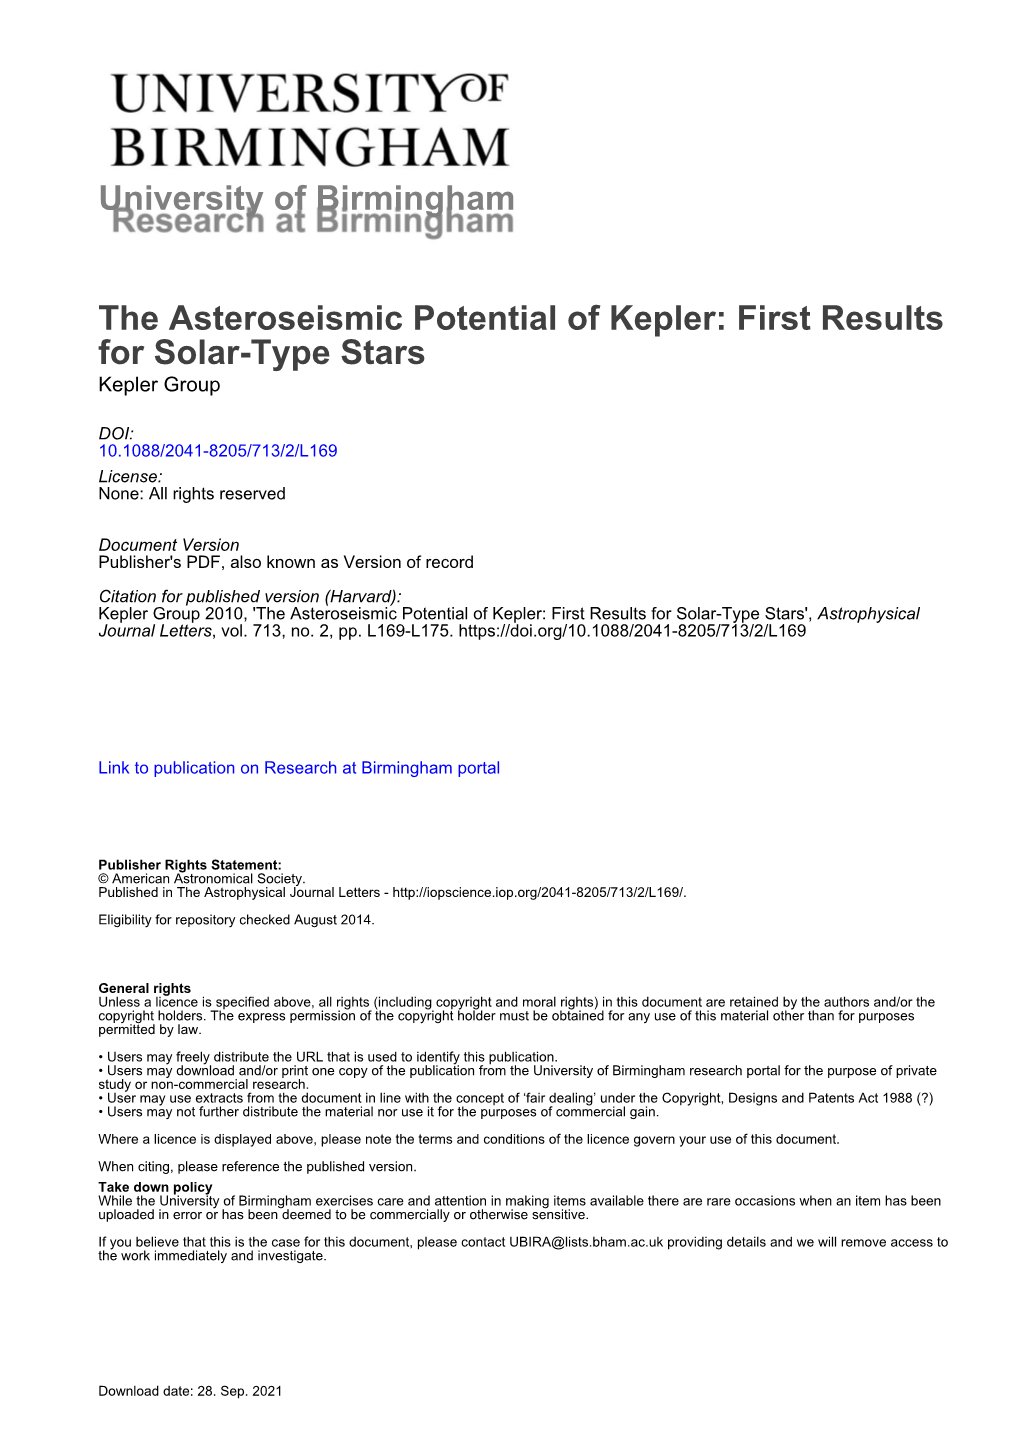 University of Birmingham the Asteroseismic Potential of Kepler